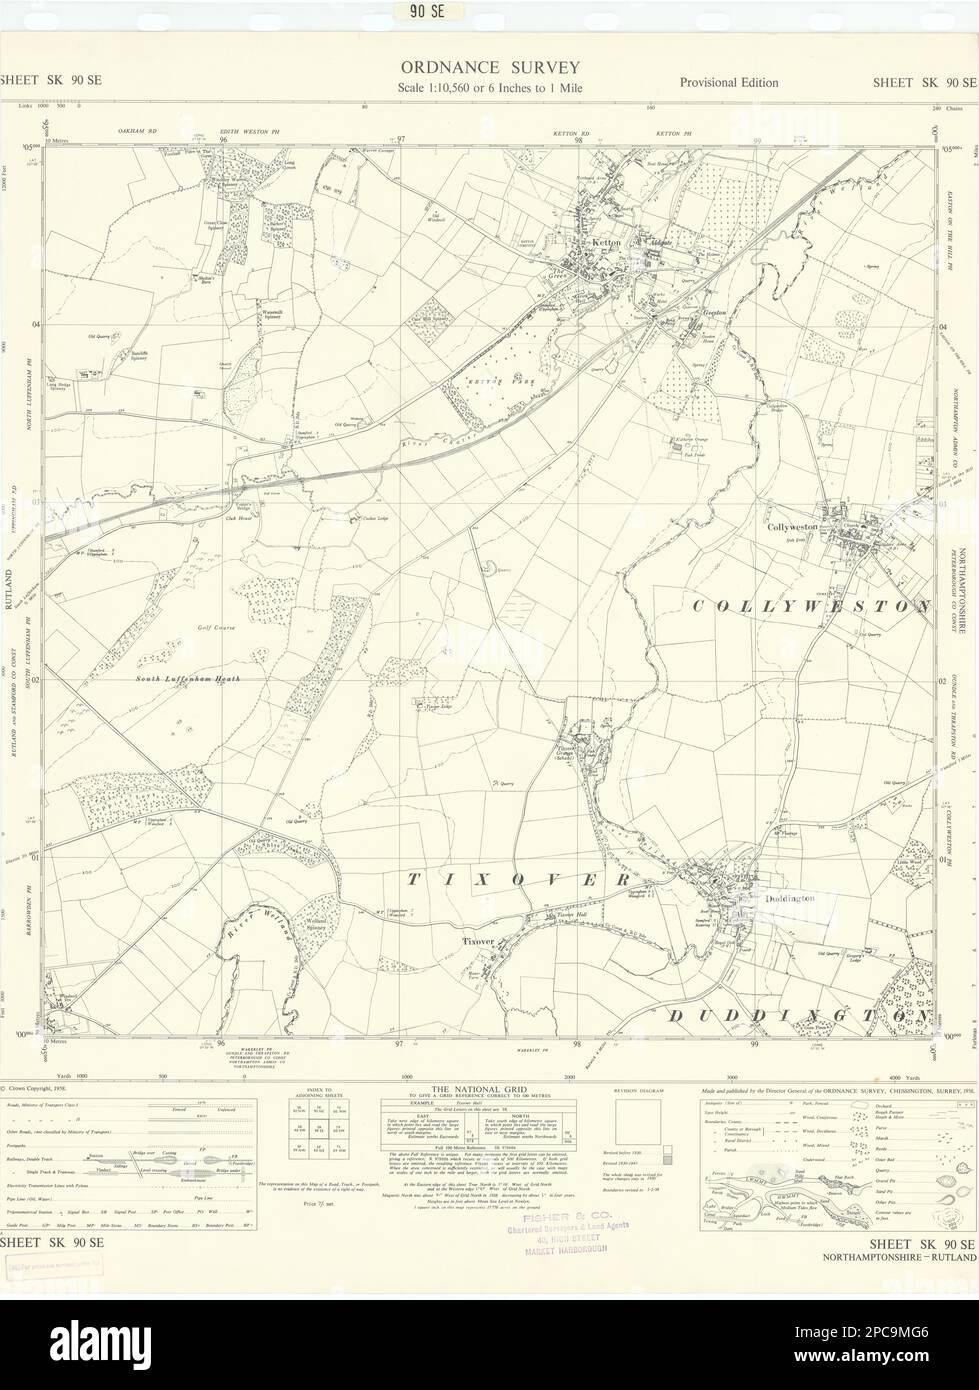 Ordnance Survey SK90SE Northants Tixover Collyweston Duddington Ketton 1958 mapa Foto de stock